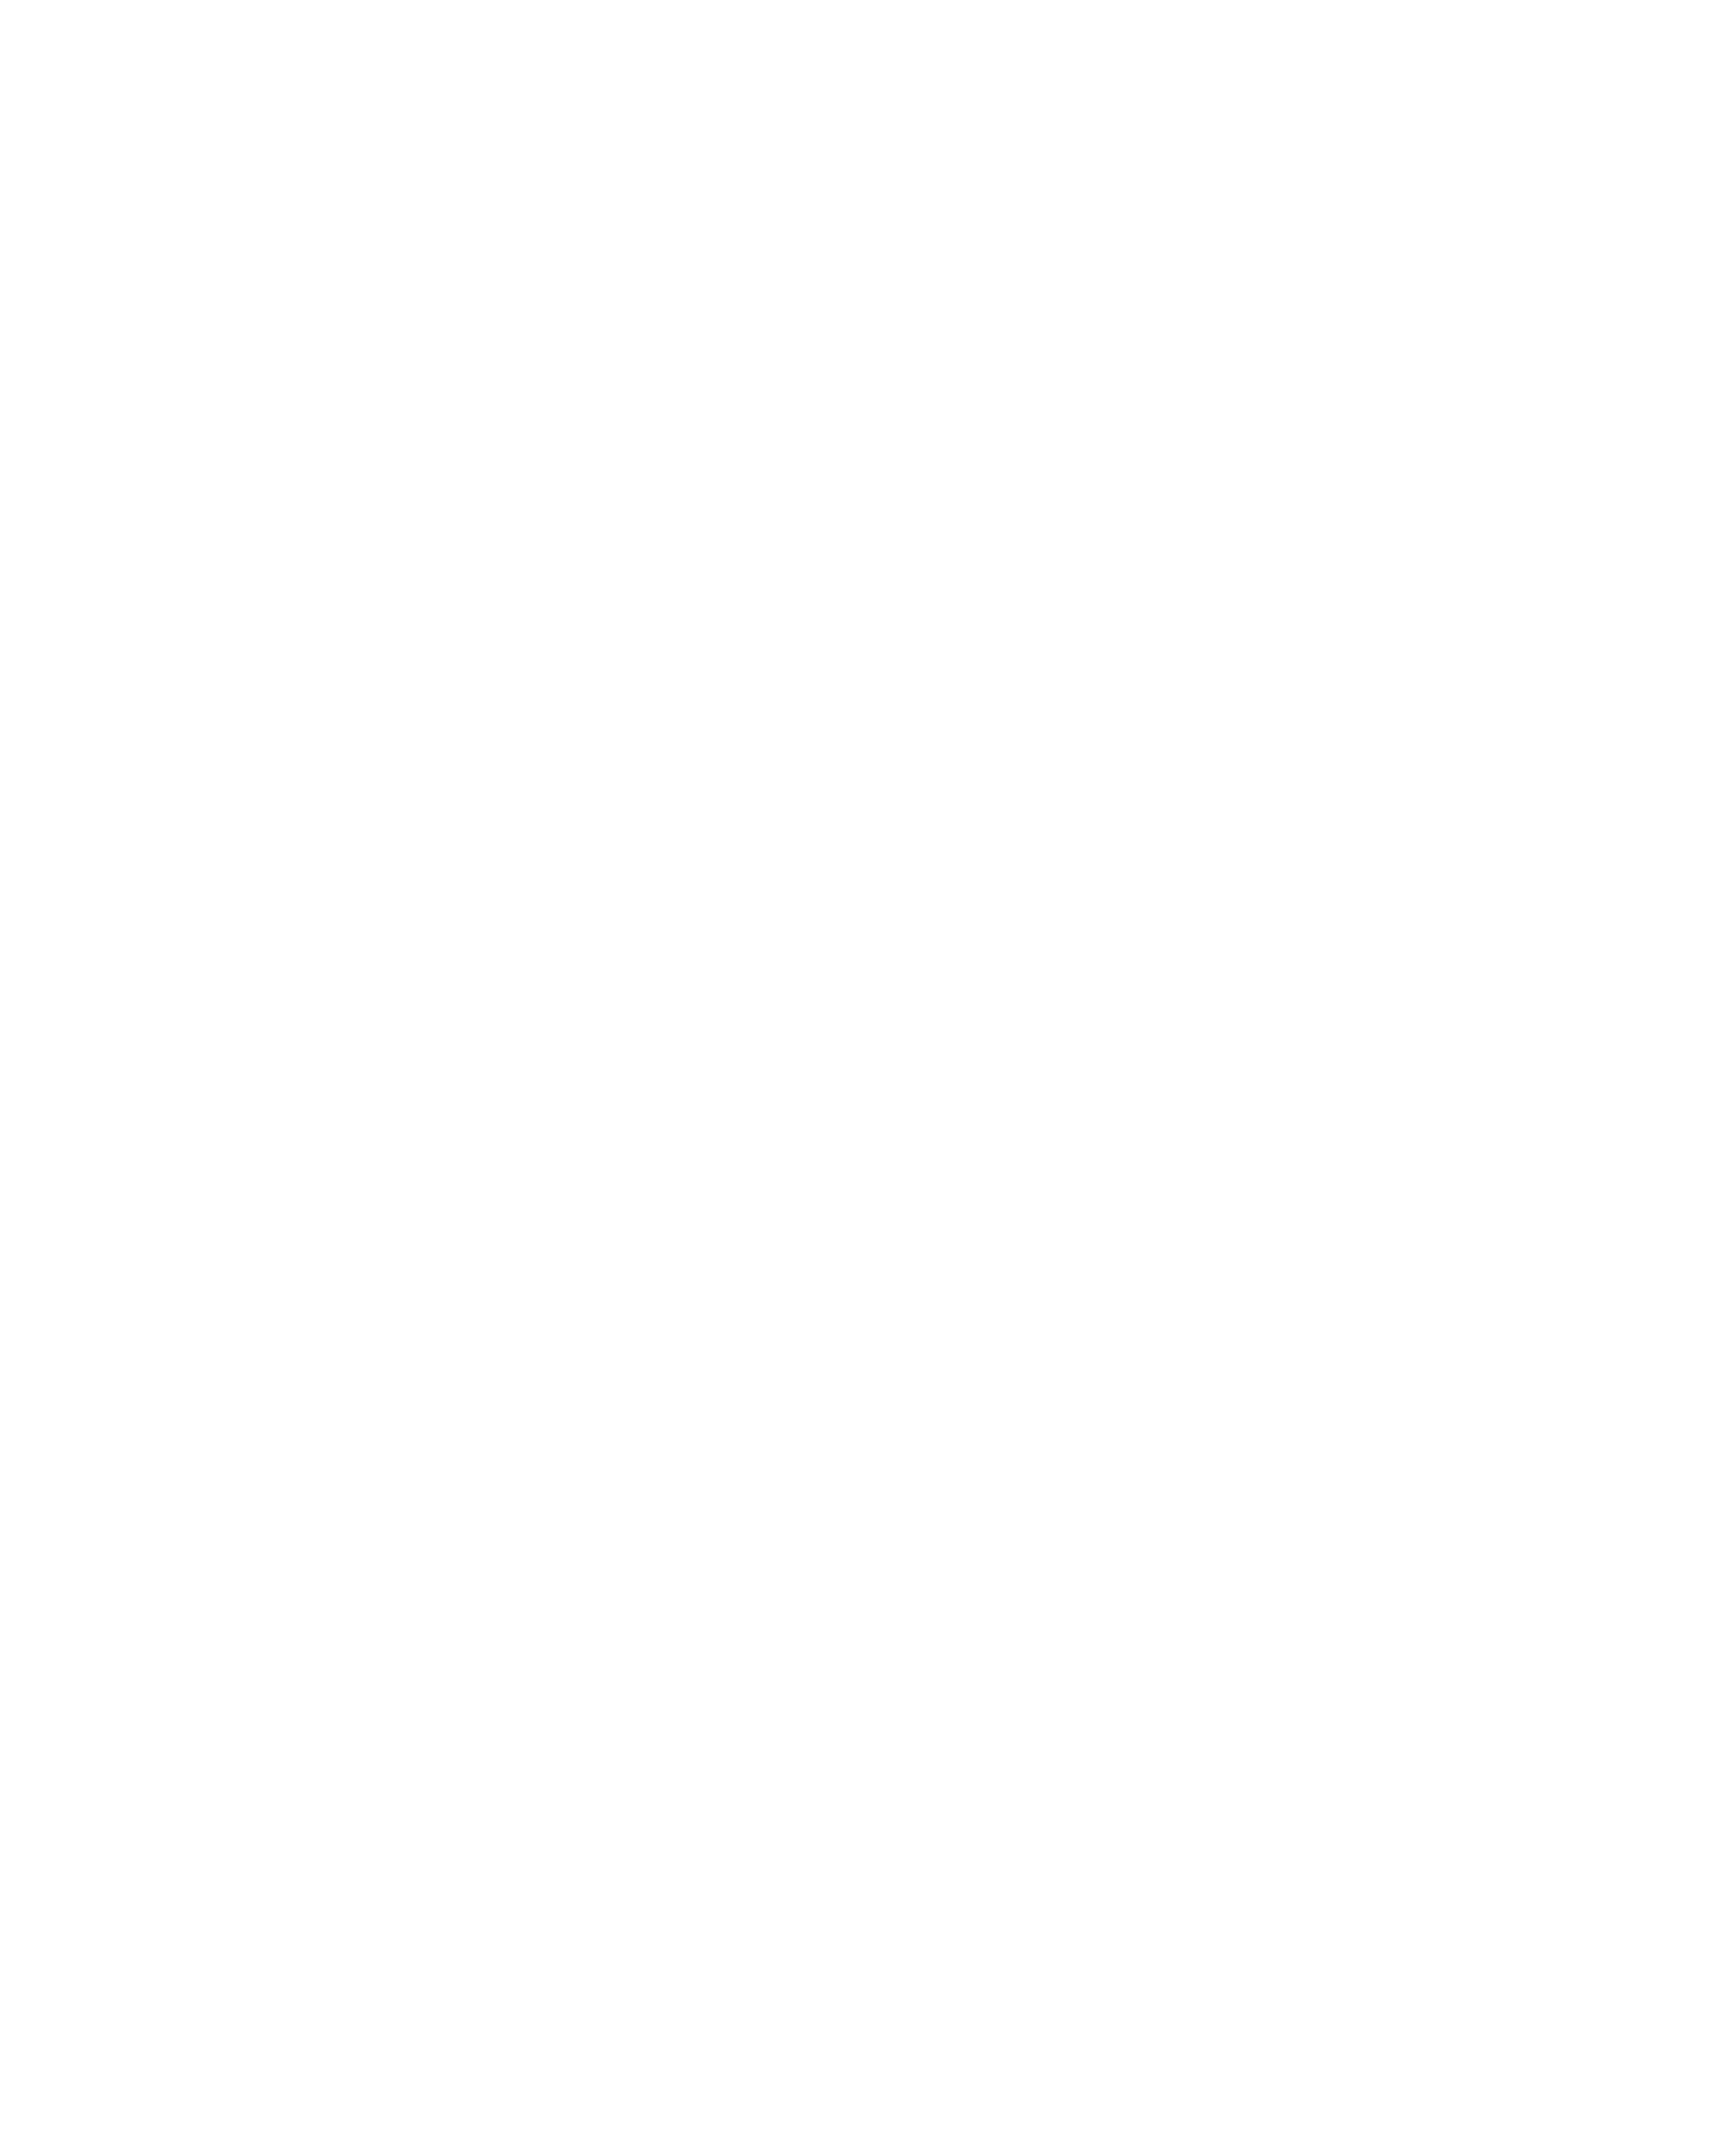 the riverwood landscape logo on a green background.